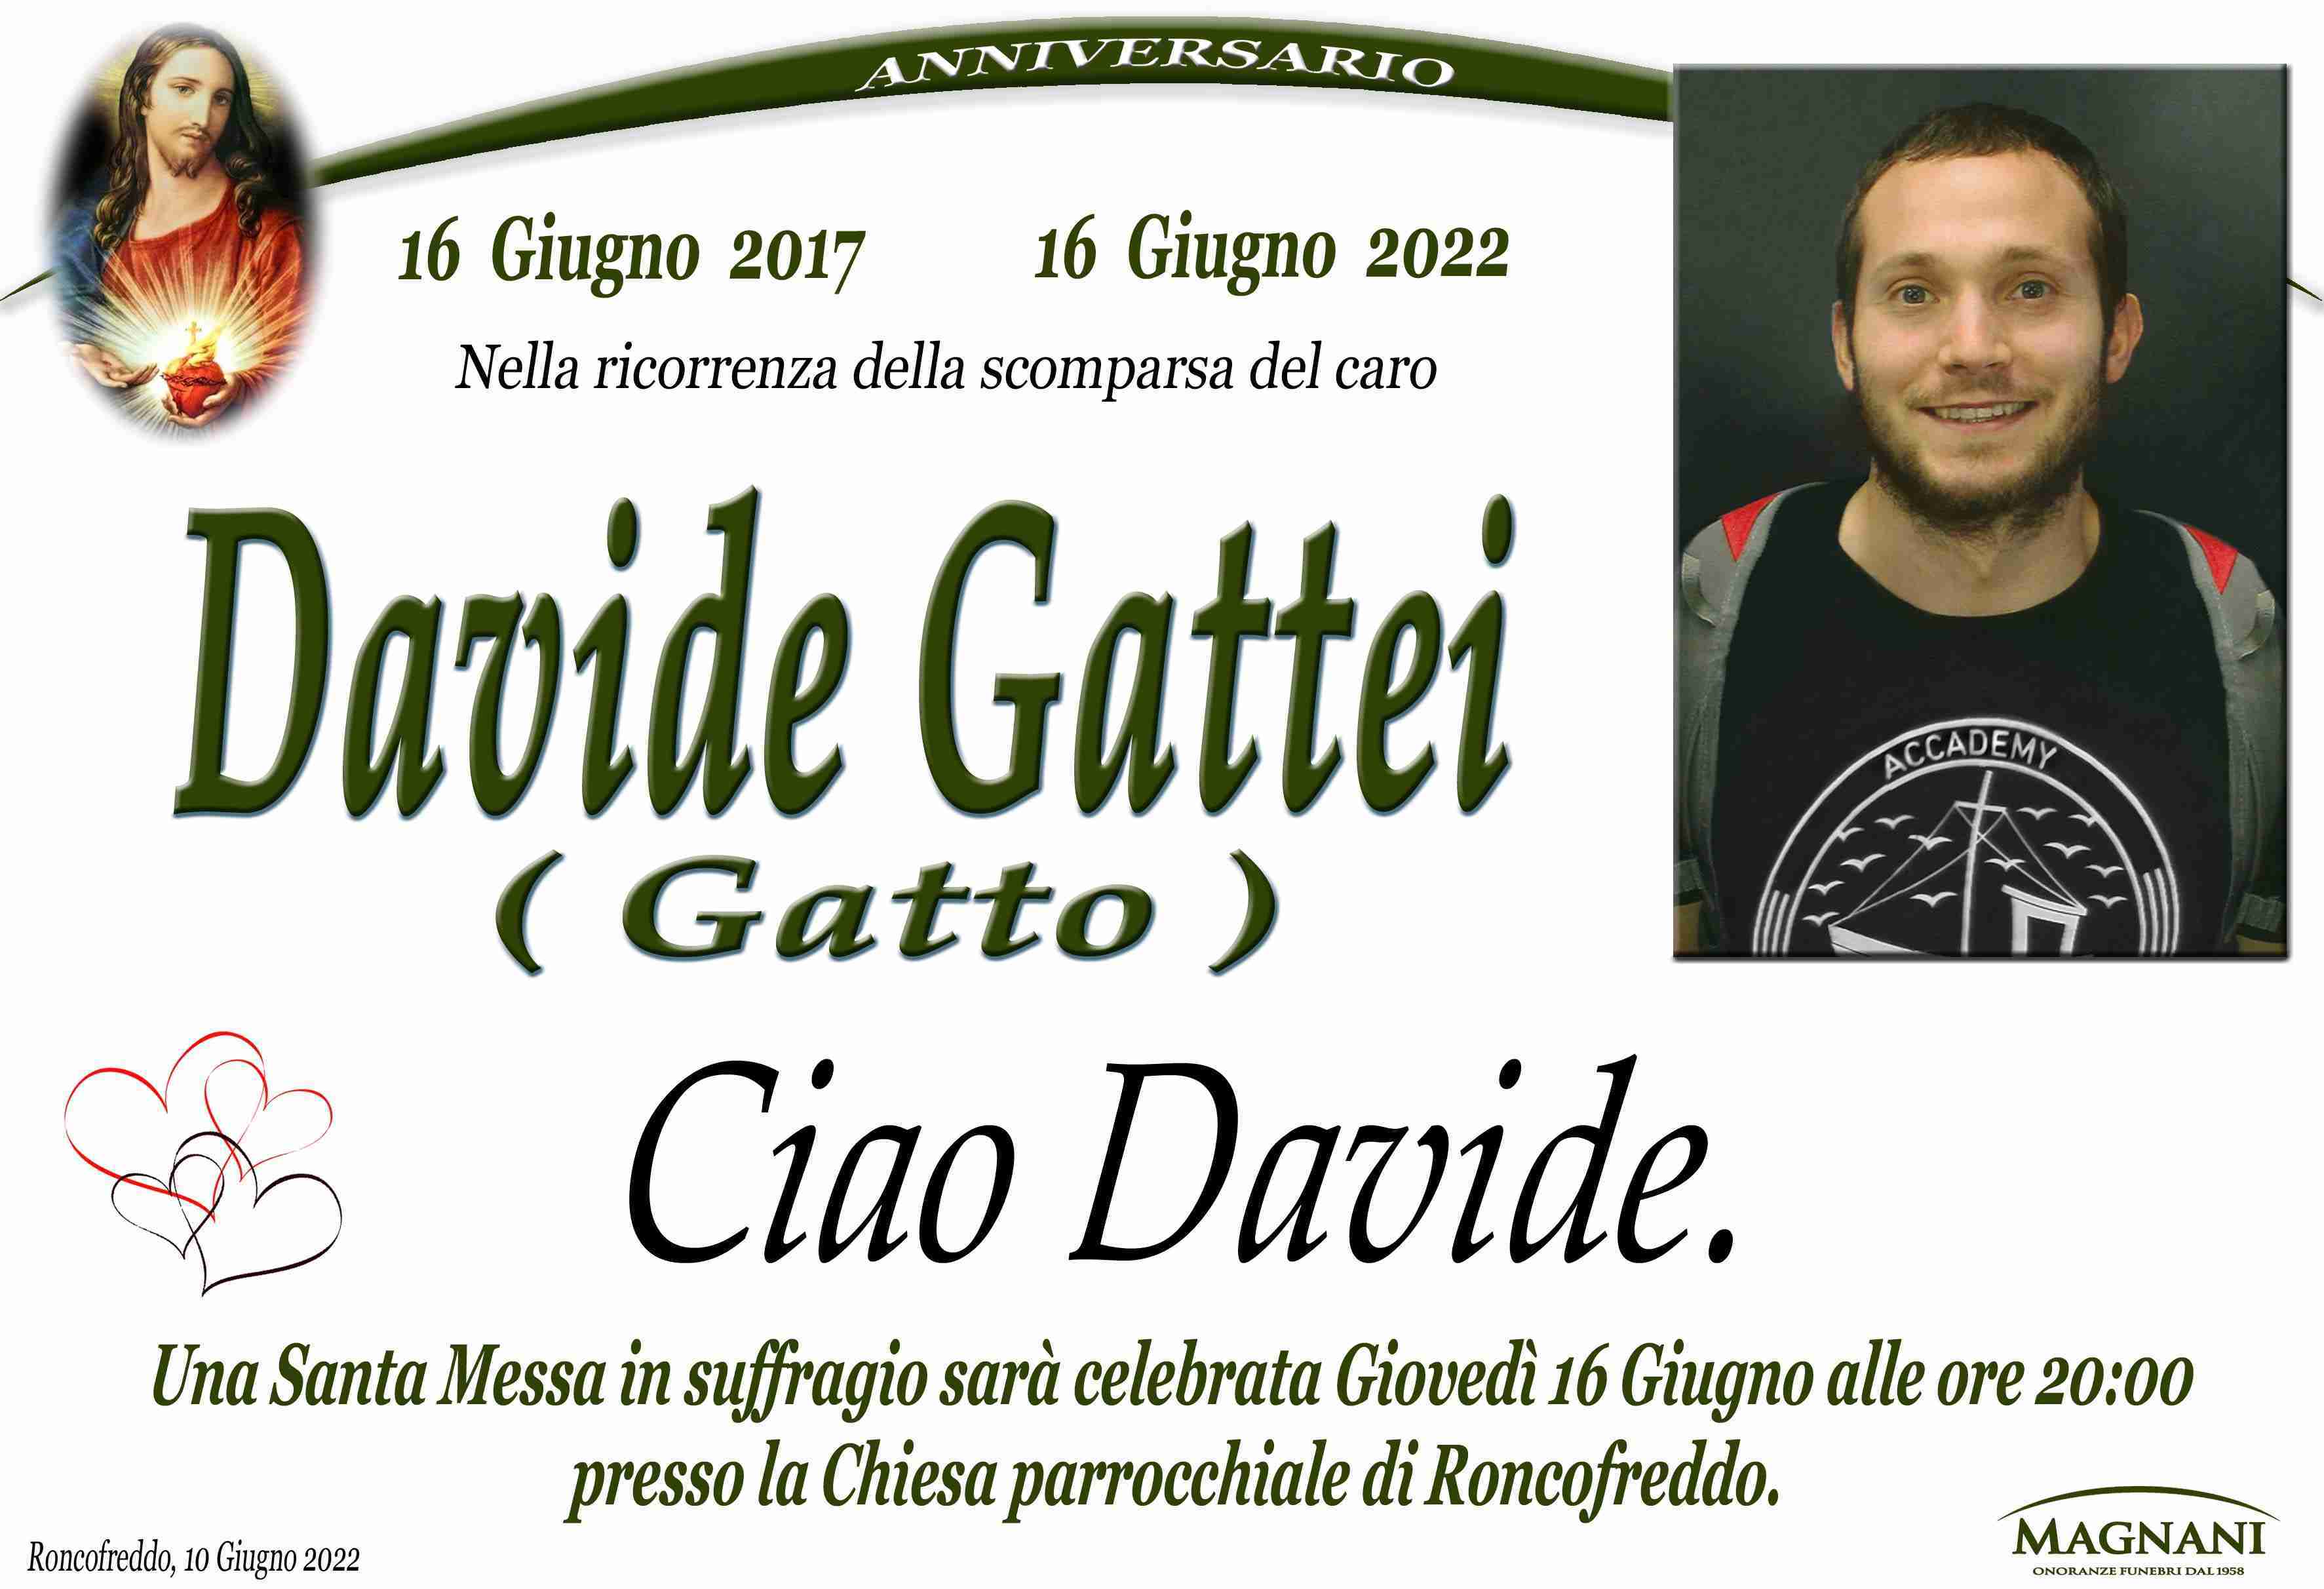 Davide Gattei